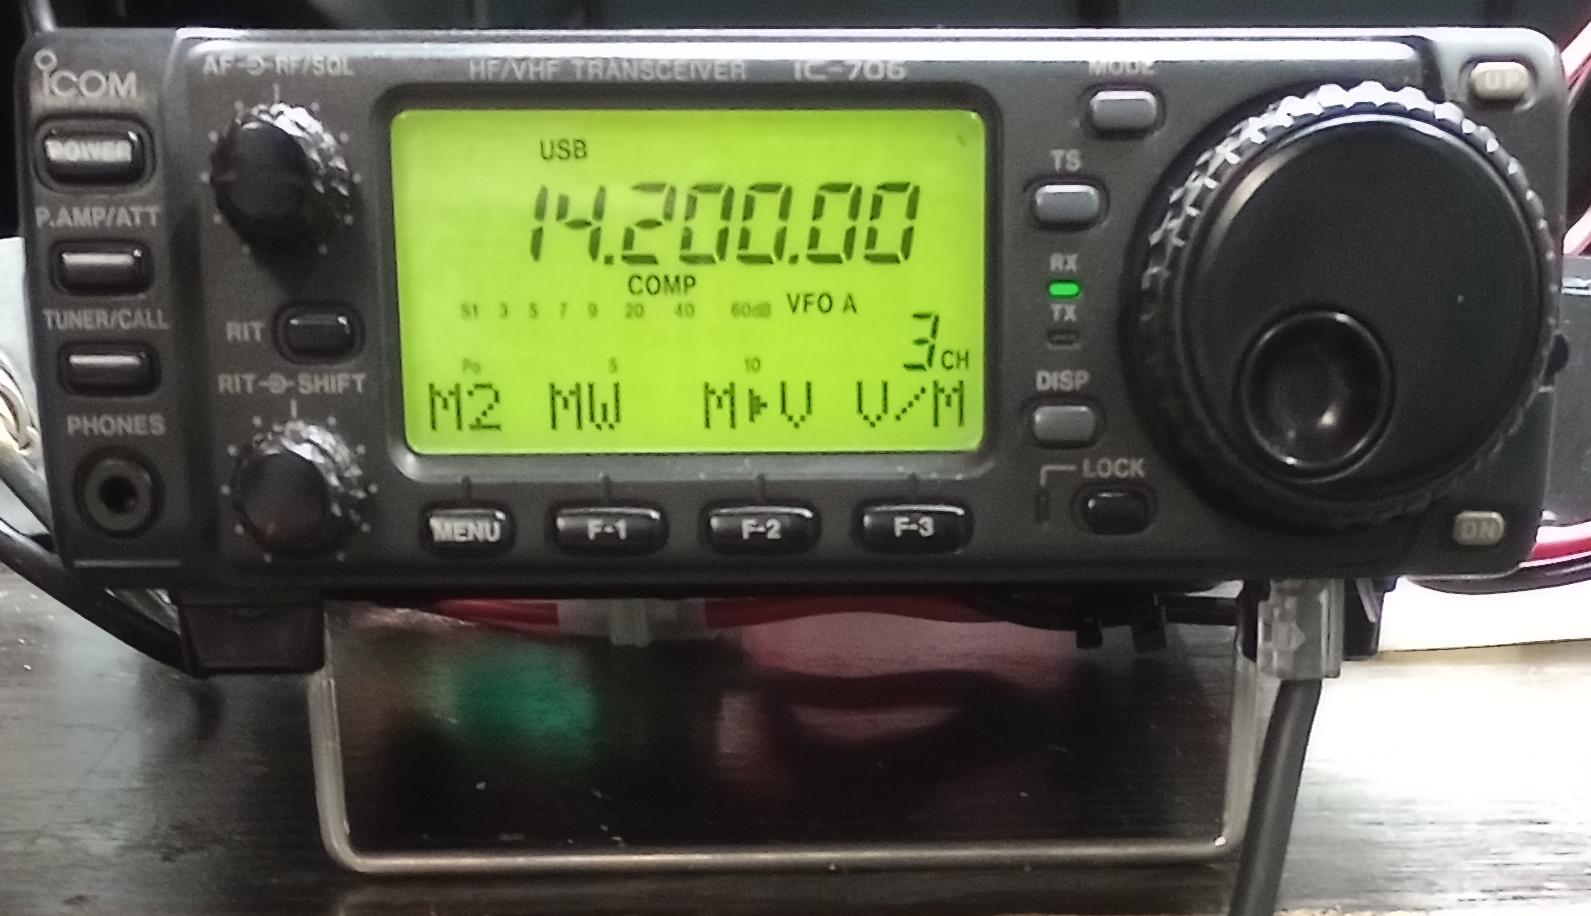 Front of radio